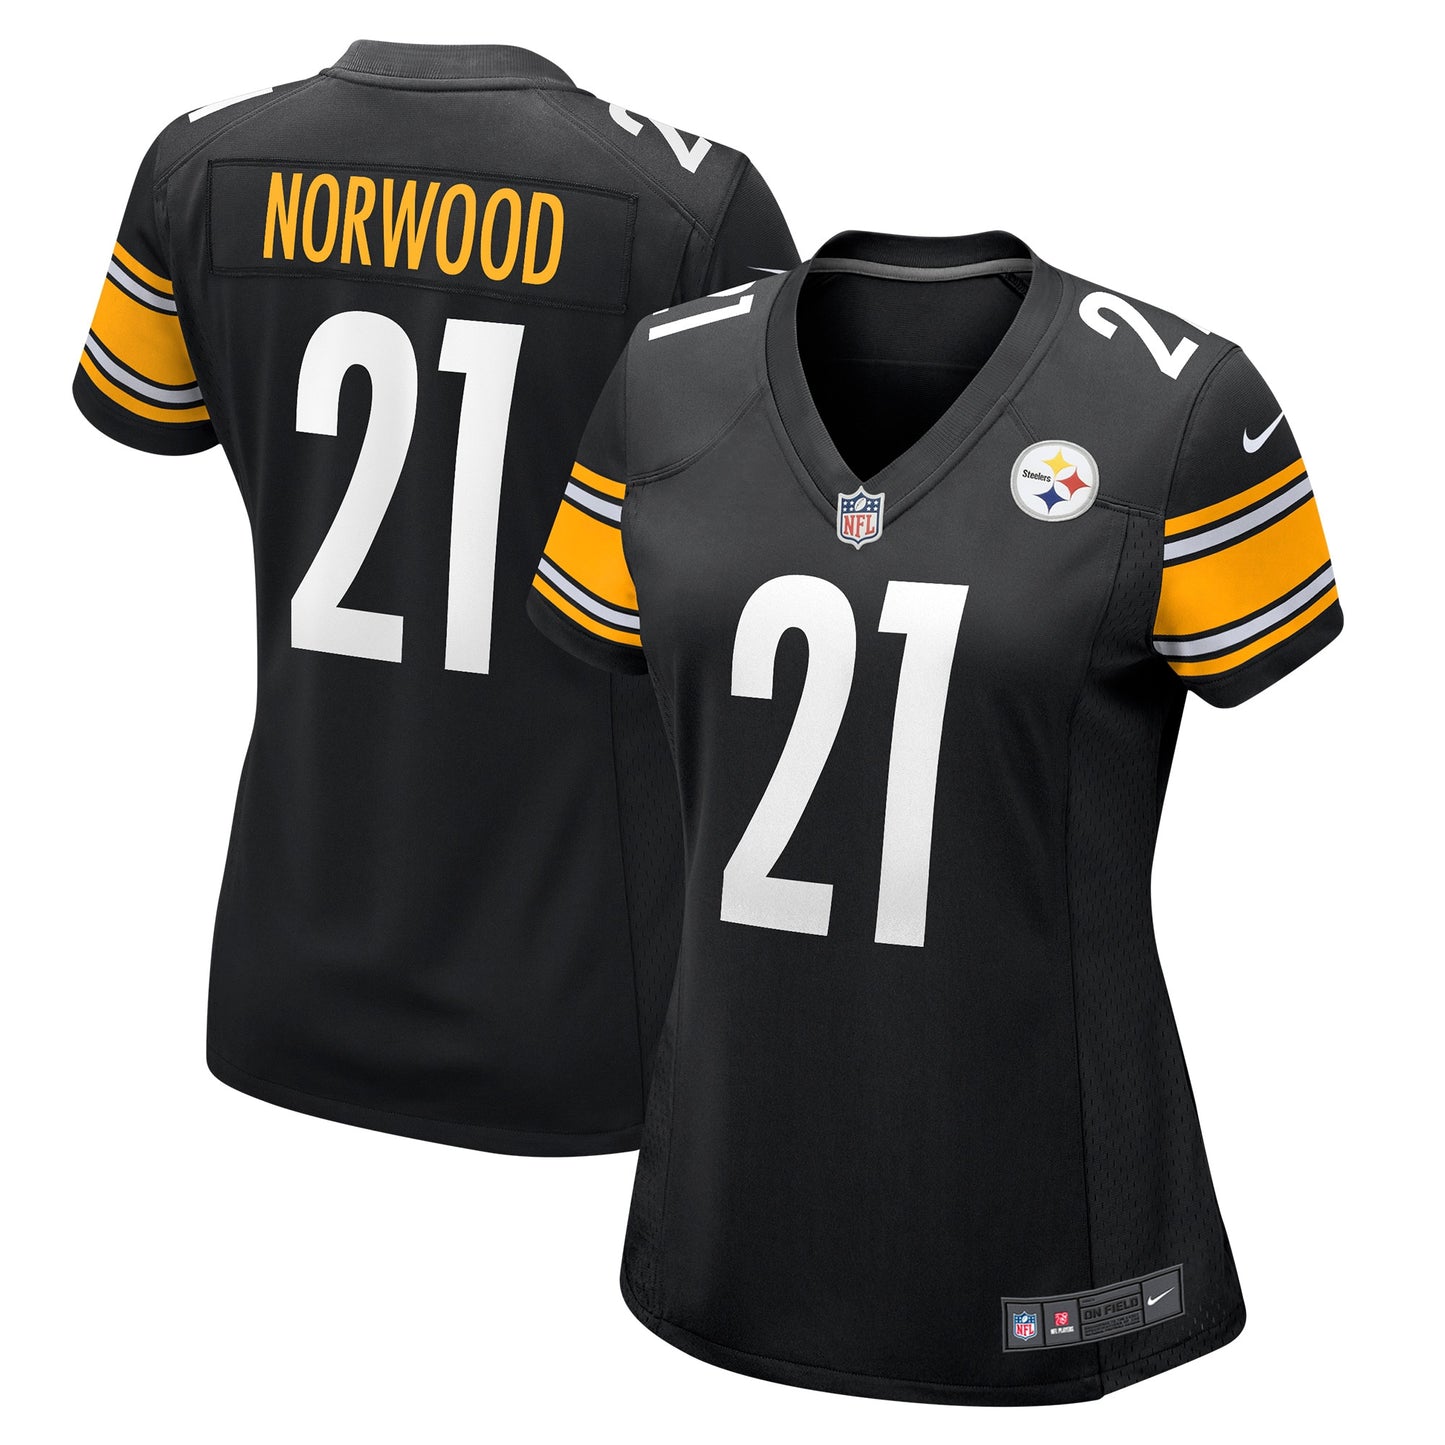 Tre Norwood Pittsburgh Steelers Nike Women's Game Jersey - Black